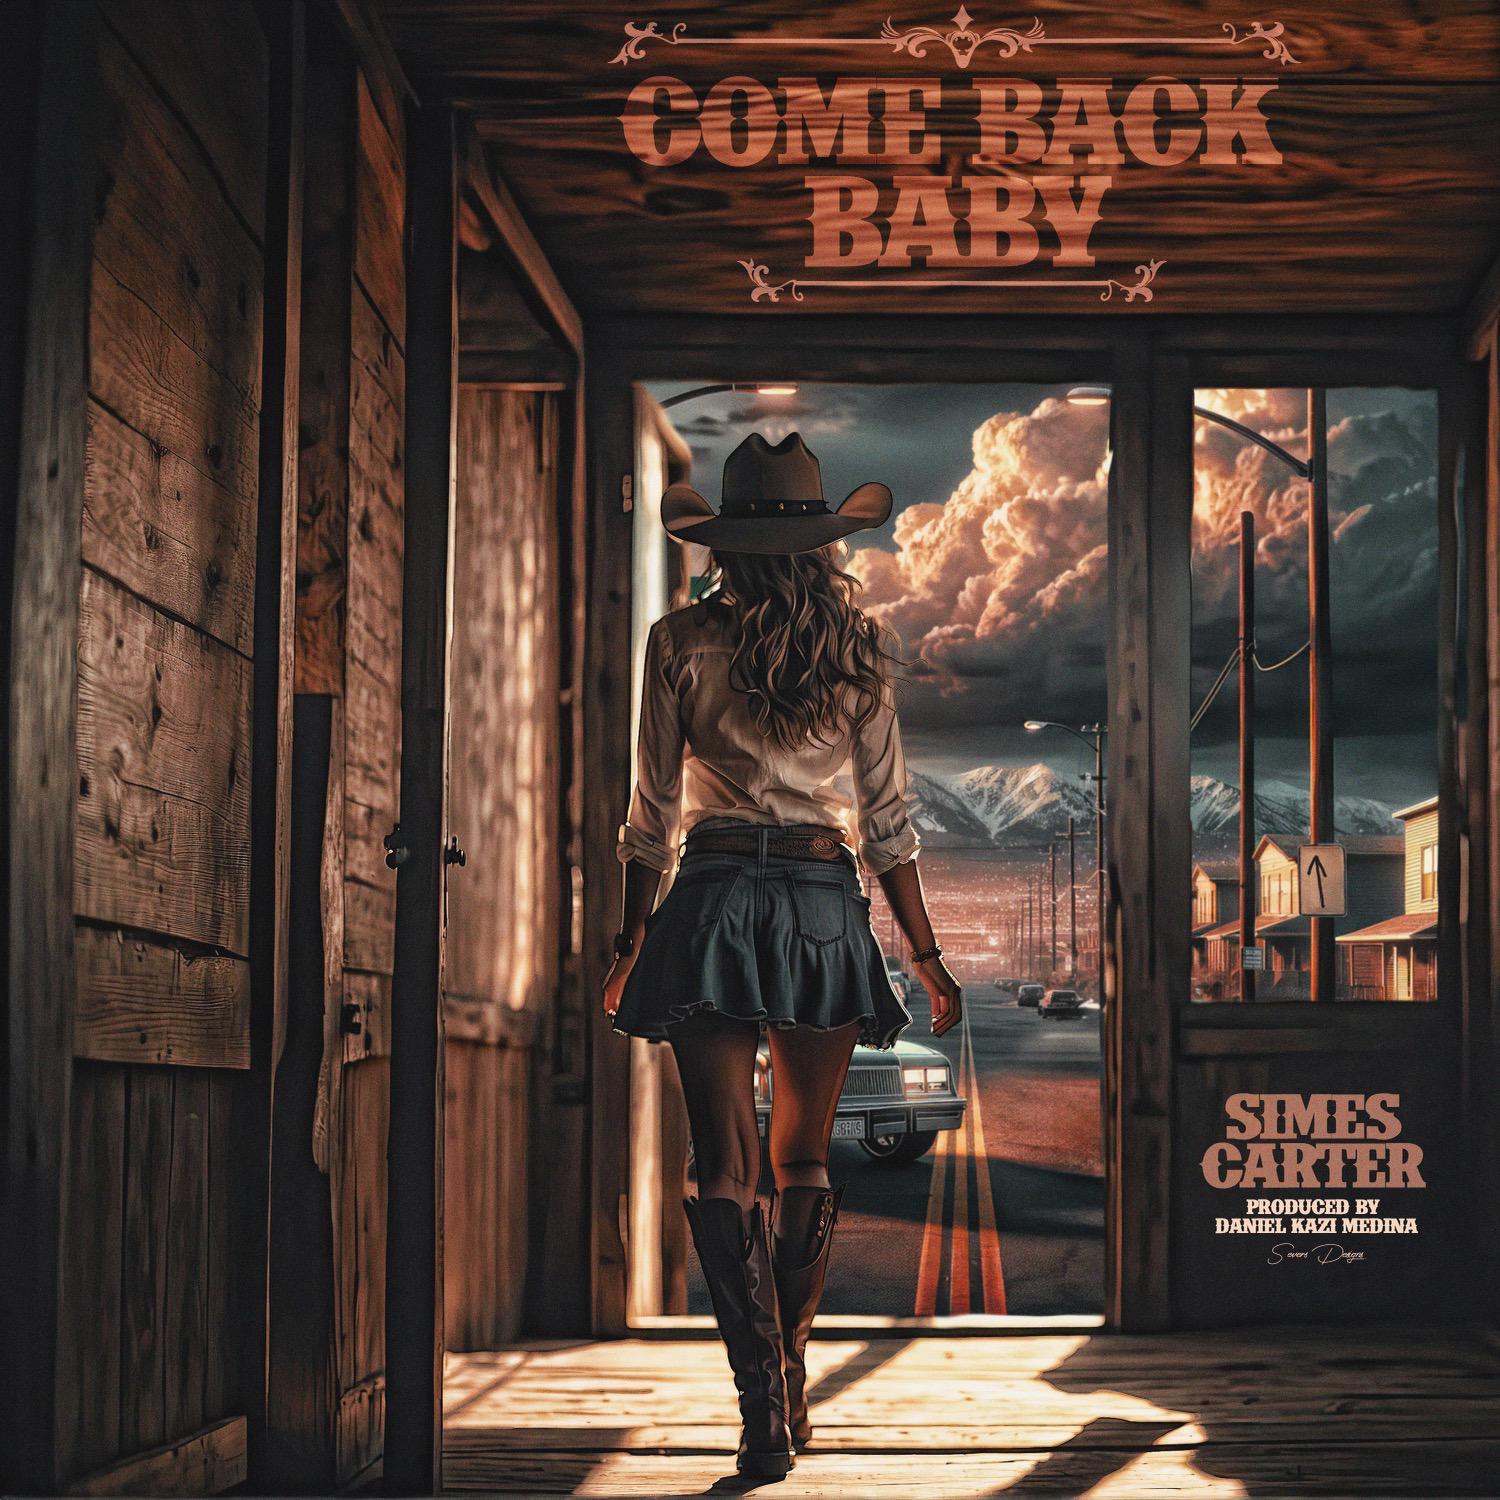 Simes Carter - Come Back Baby